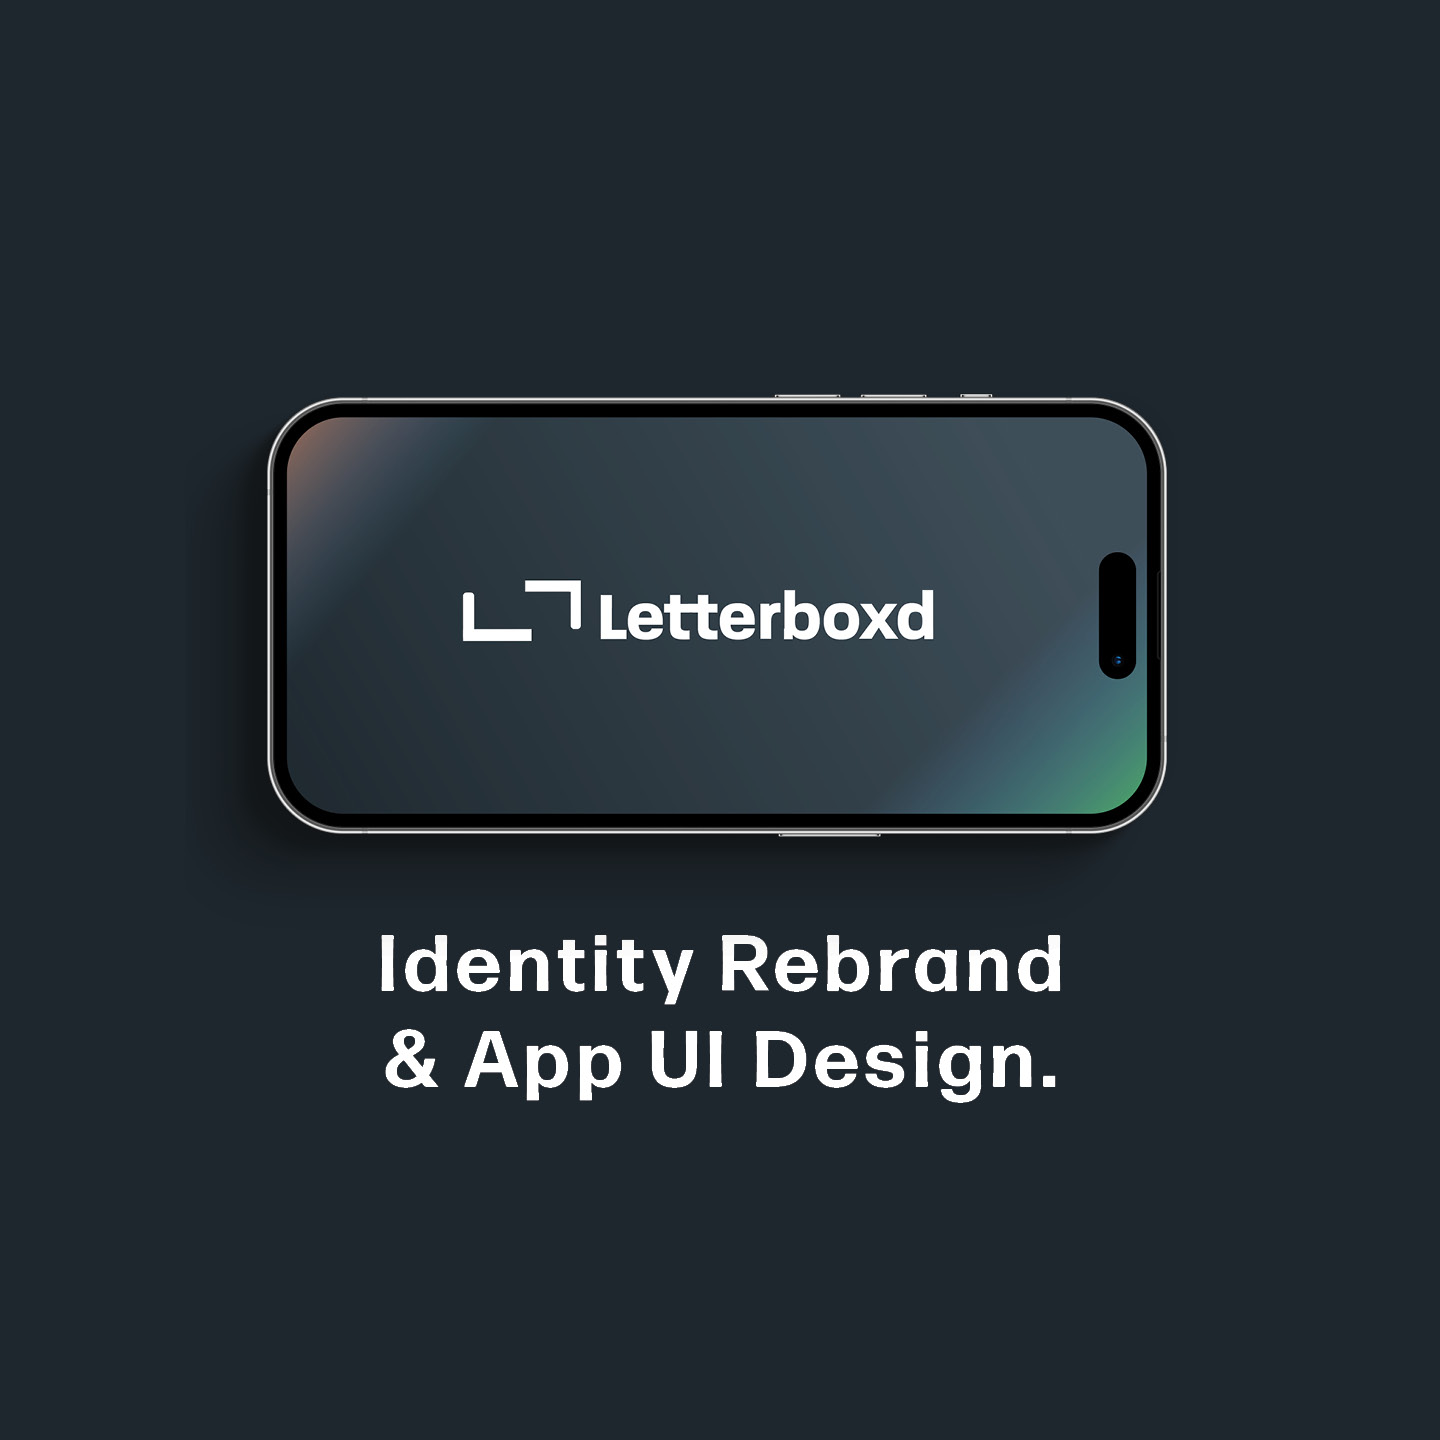 Letterboxd Identity Rebrand & App UI Design